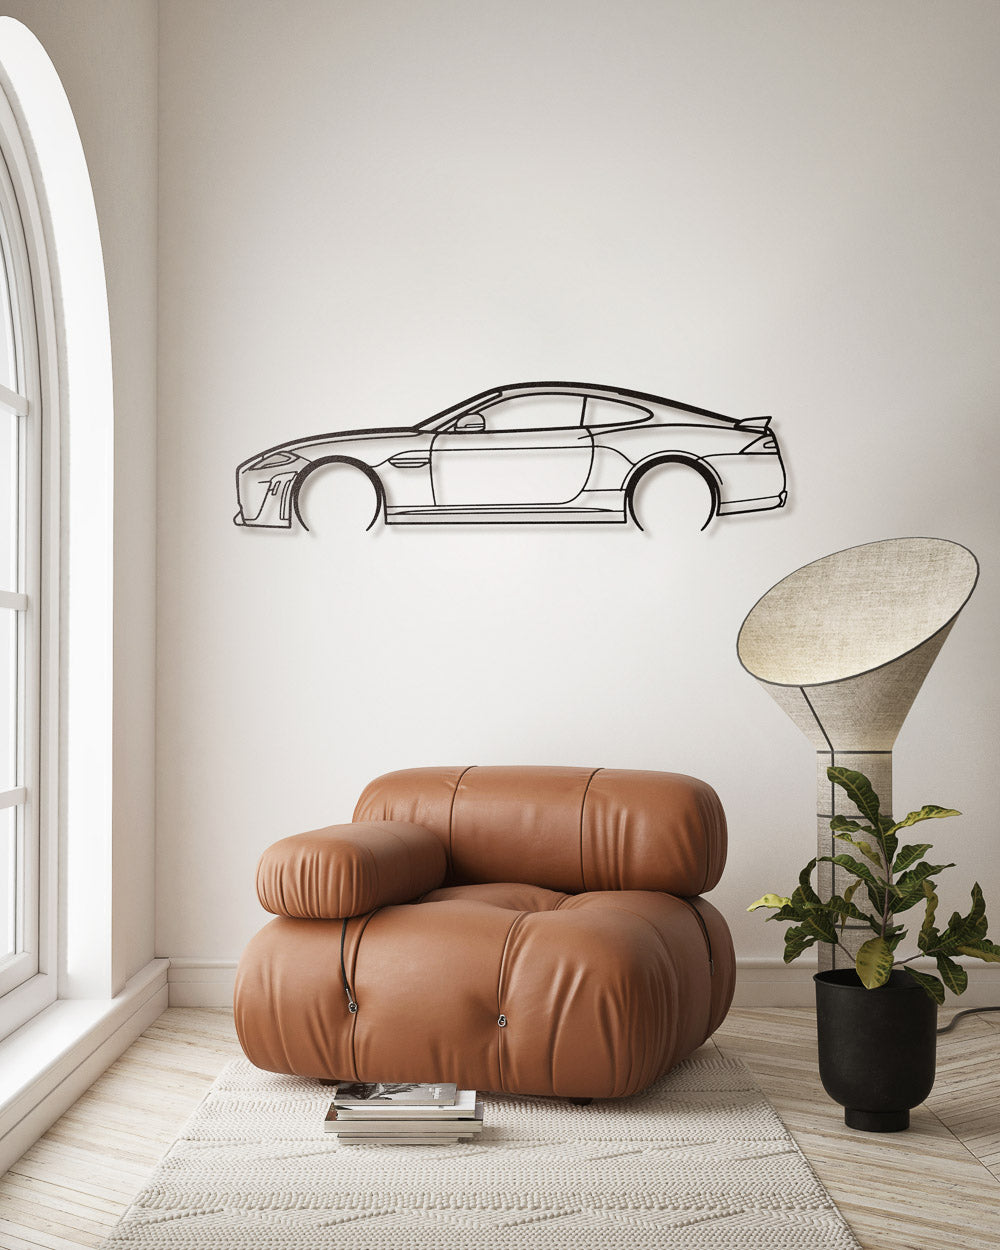 Nos - Jaguar XKRS - Sagoma in Metallo di Design Dettagliata